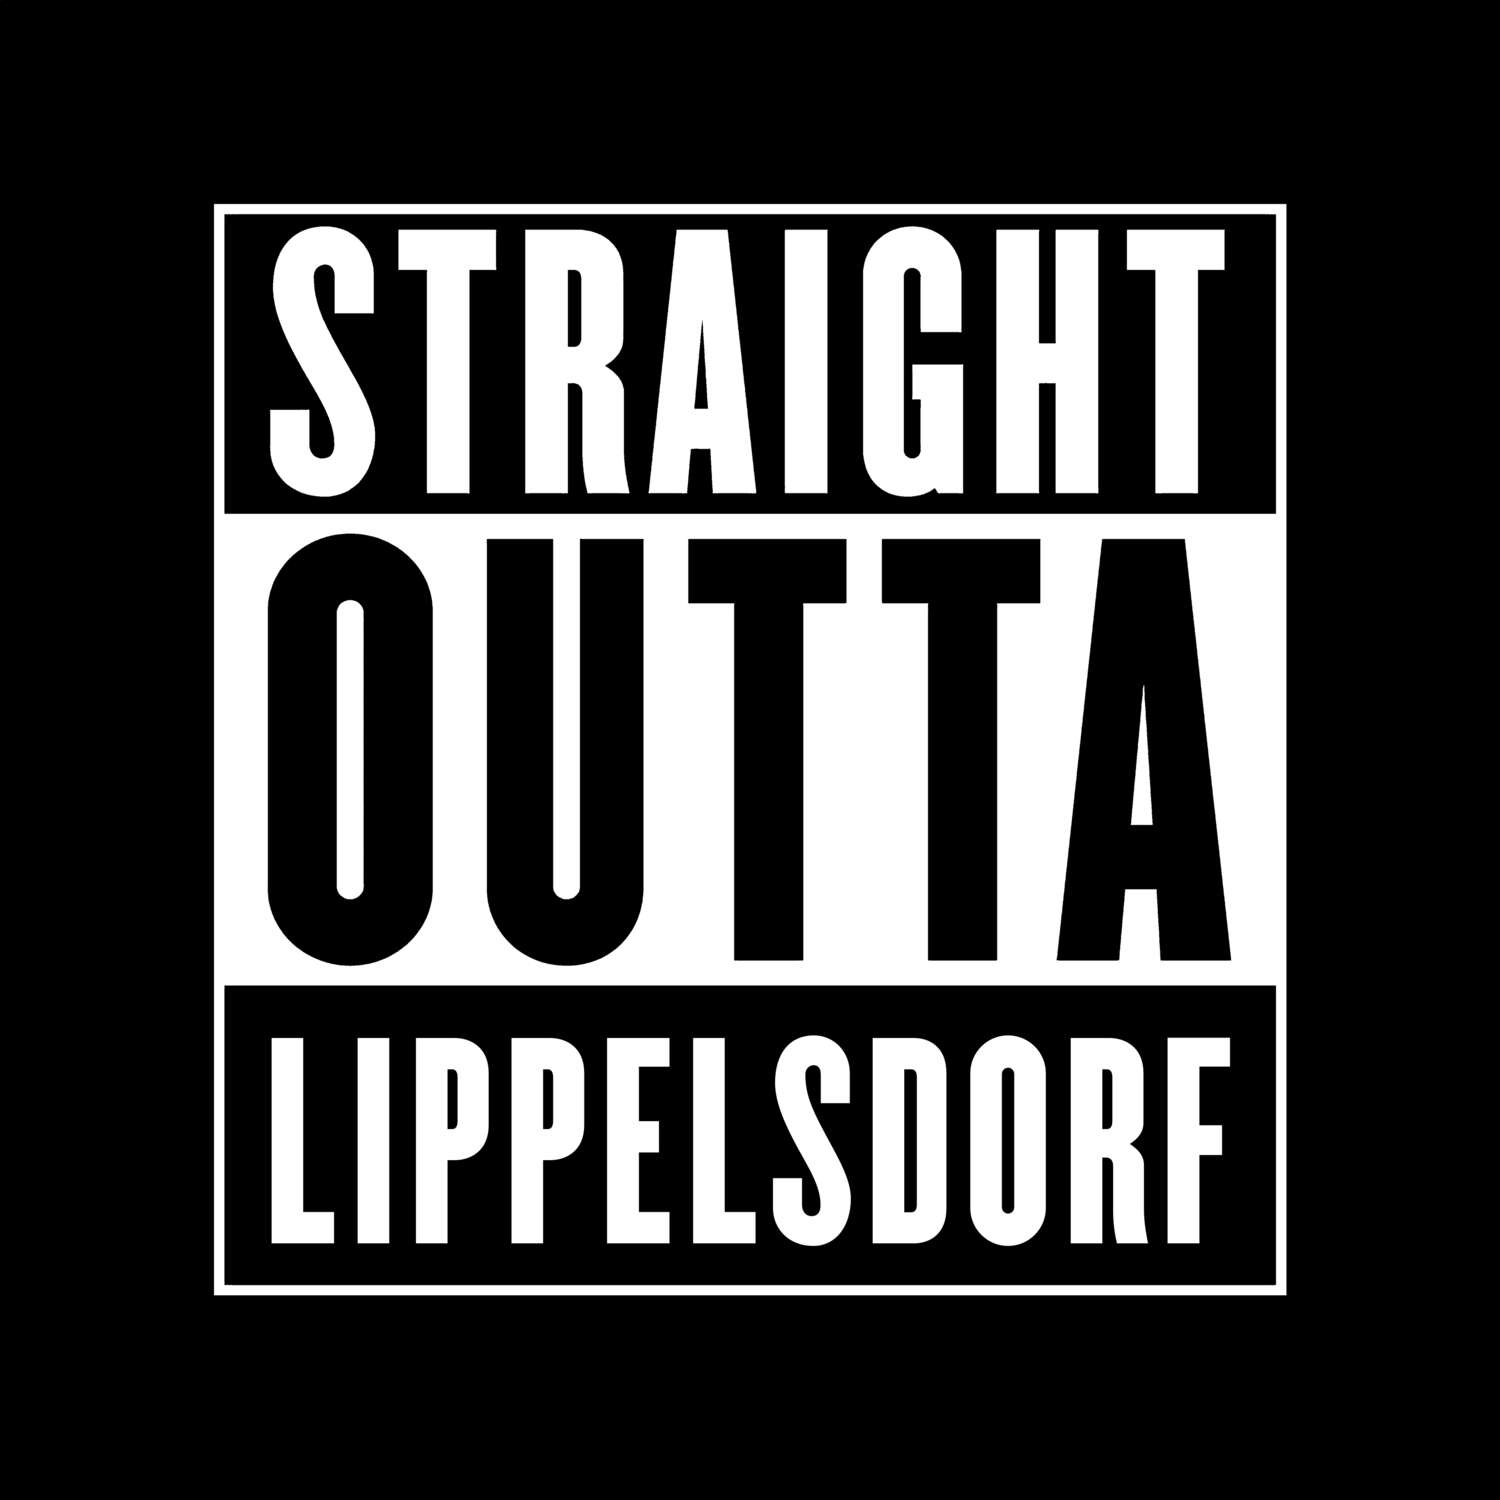 Lippelsdorf T-Shirt »Straight Outta«